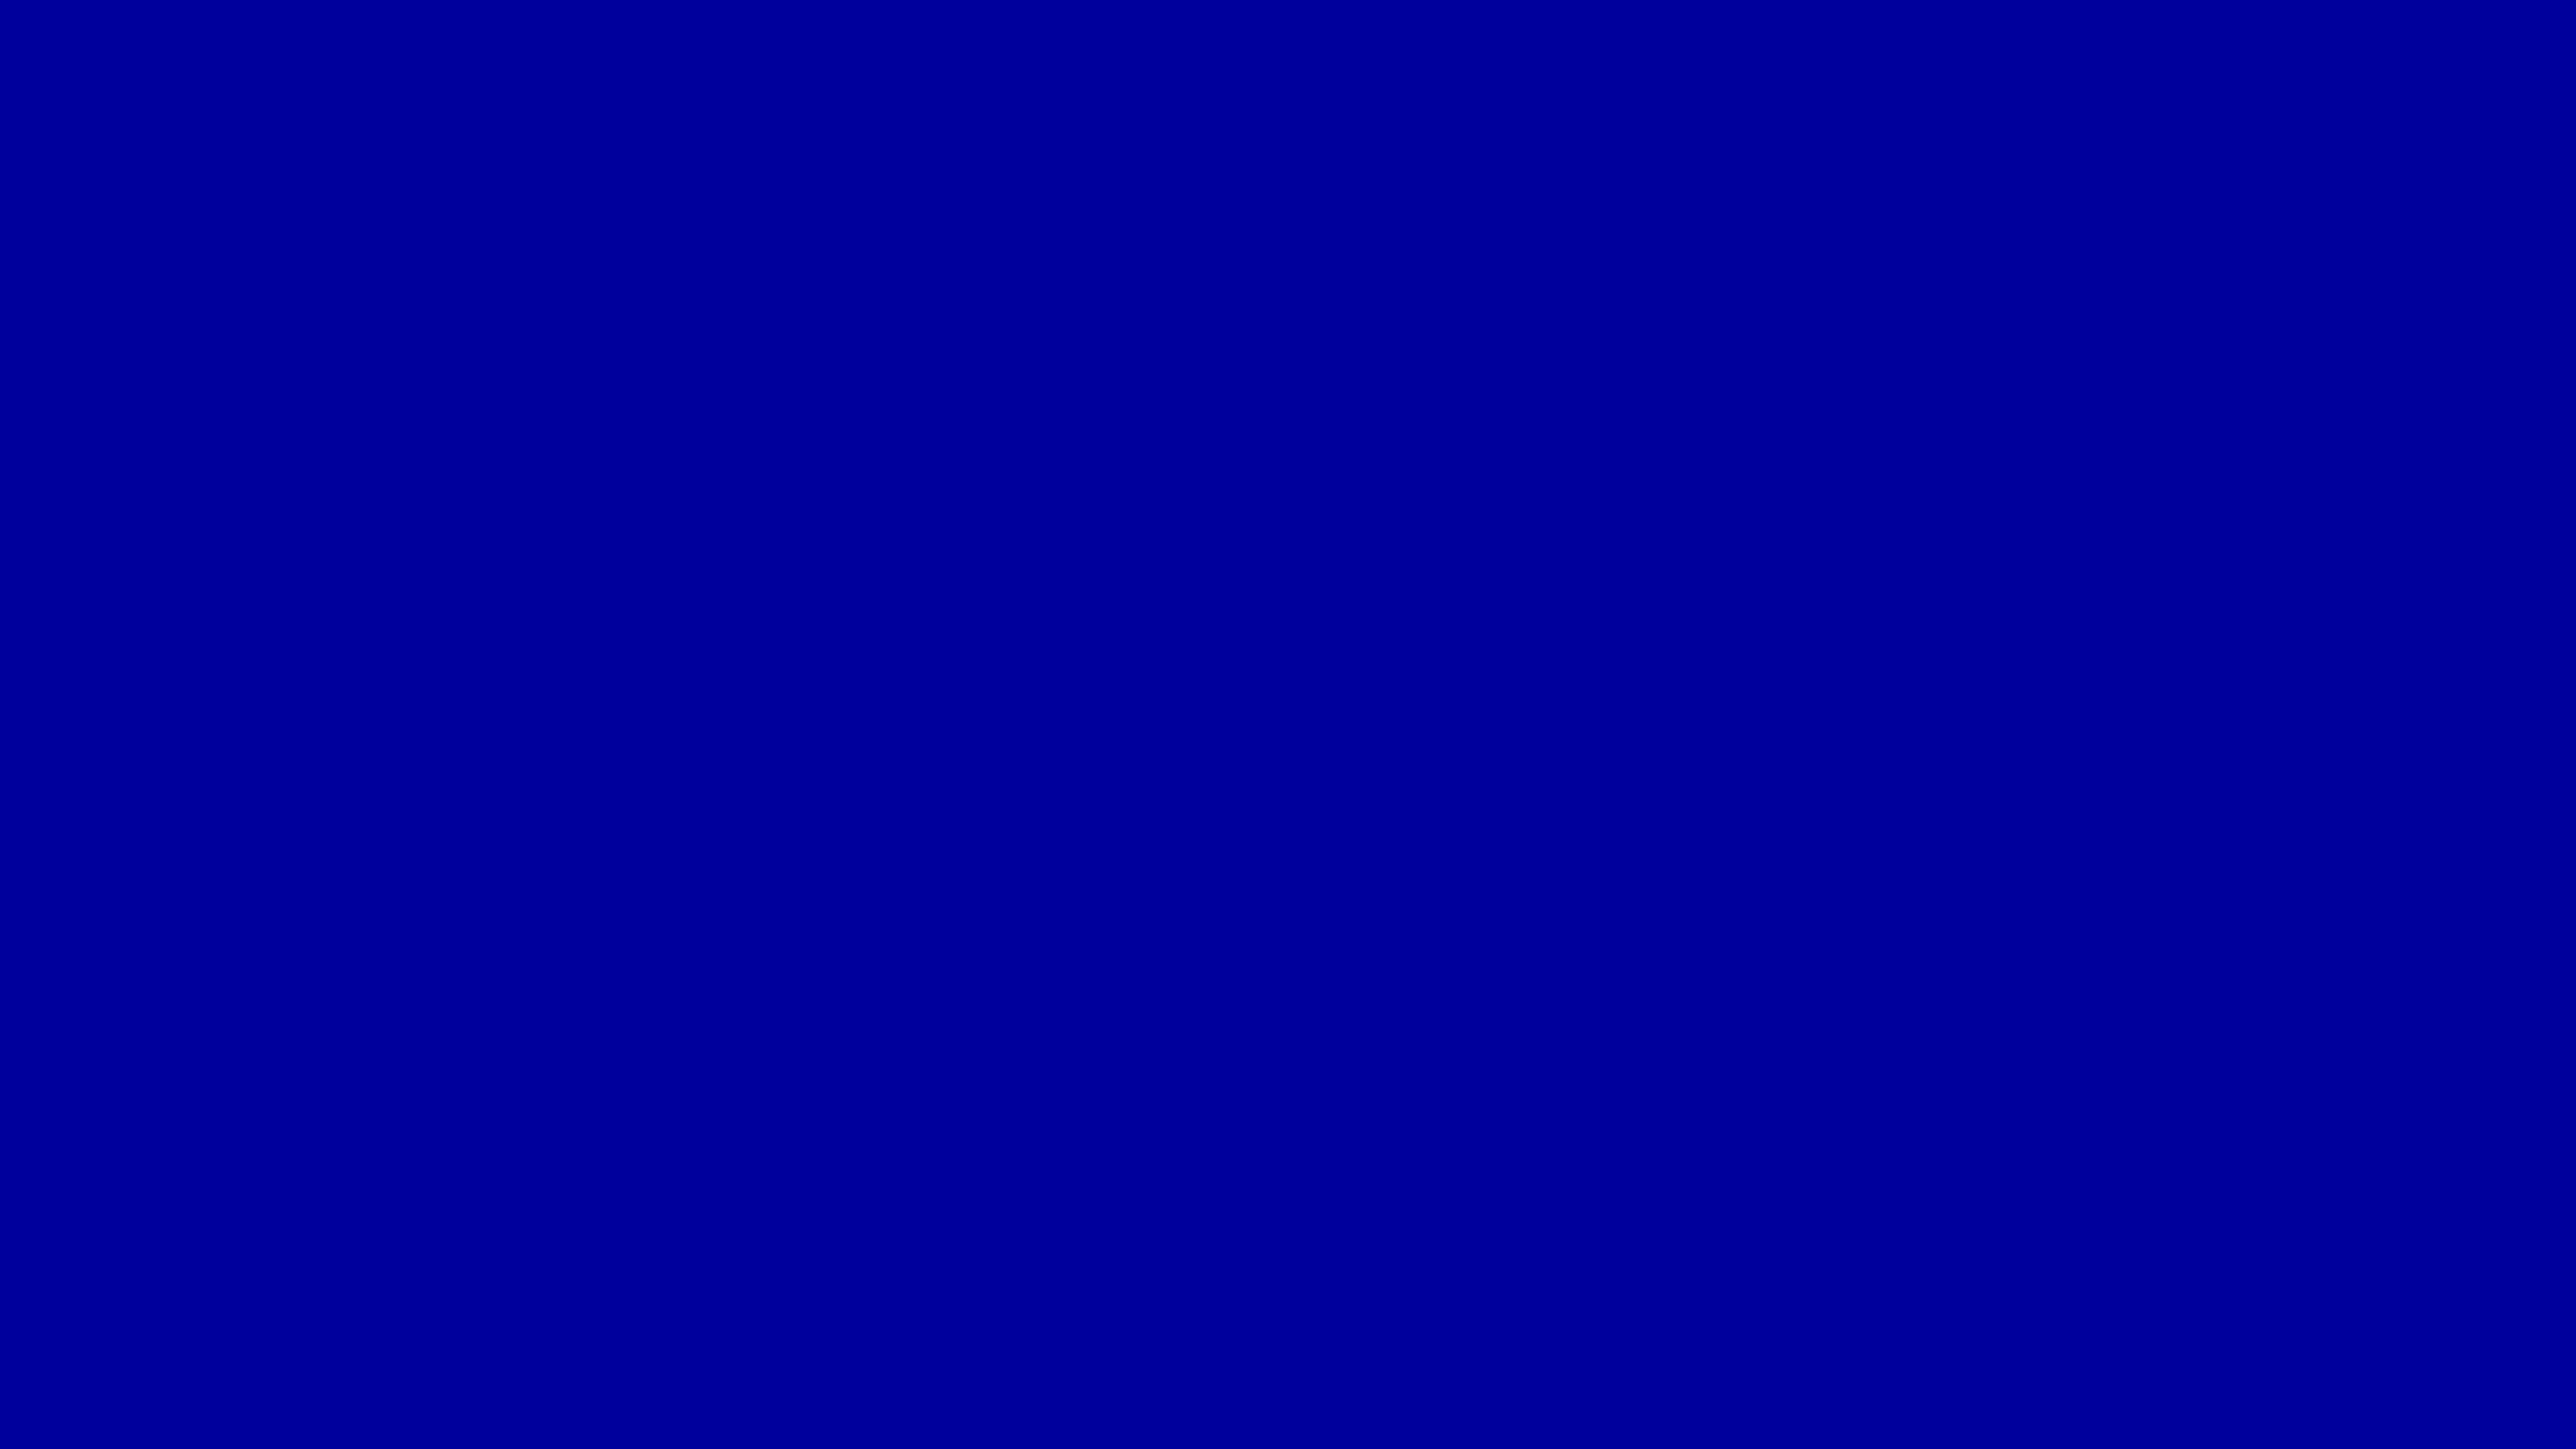 duke blue color code